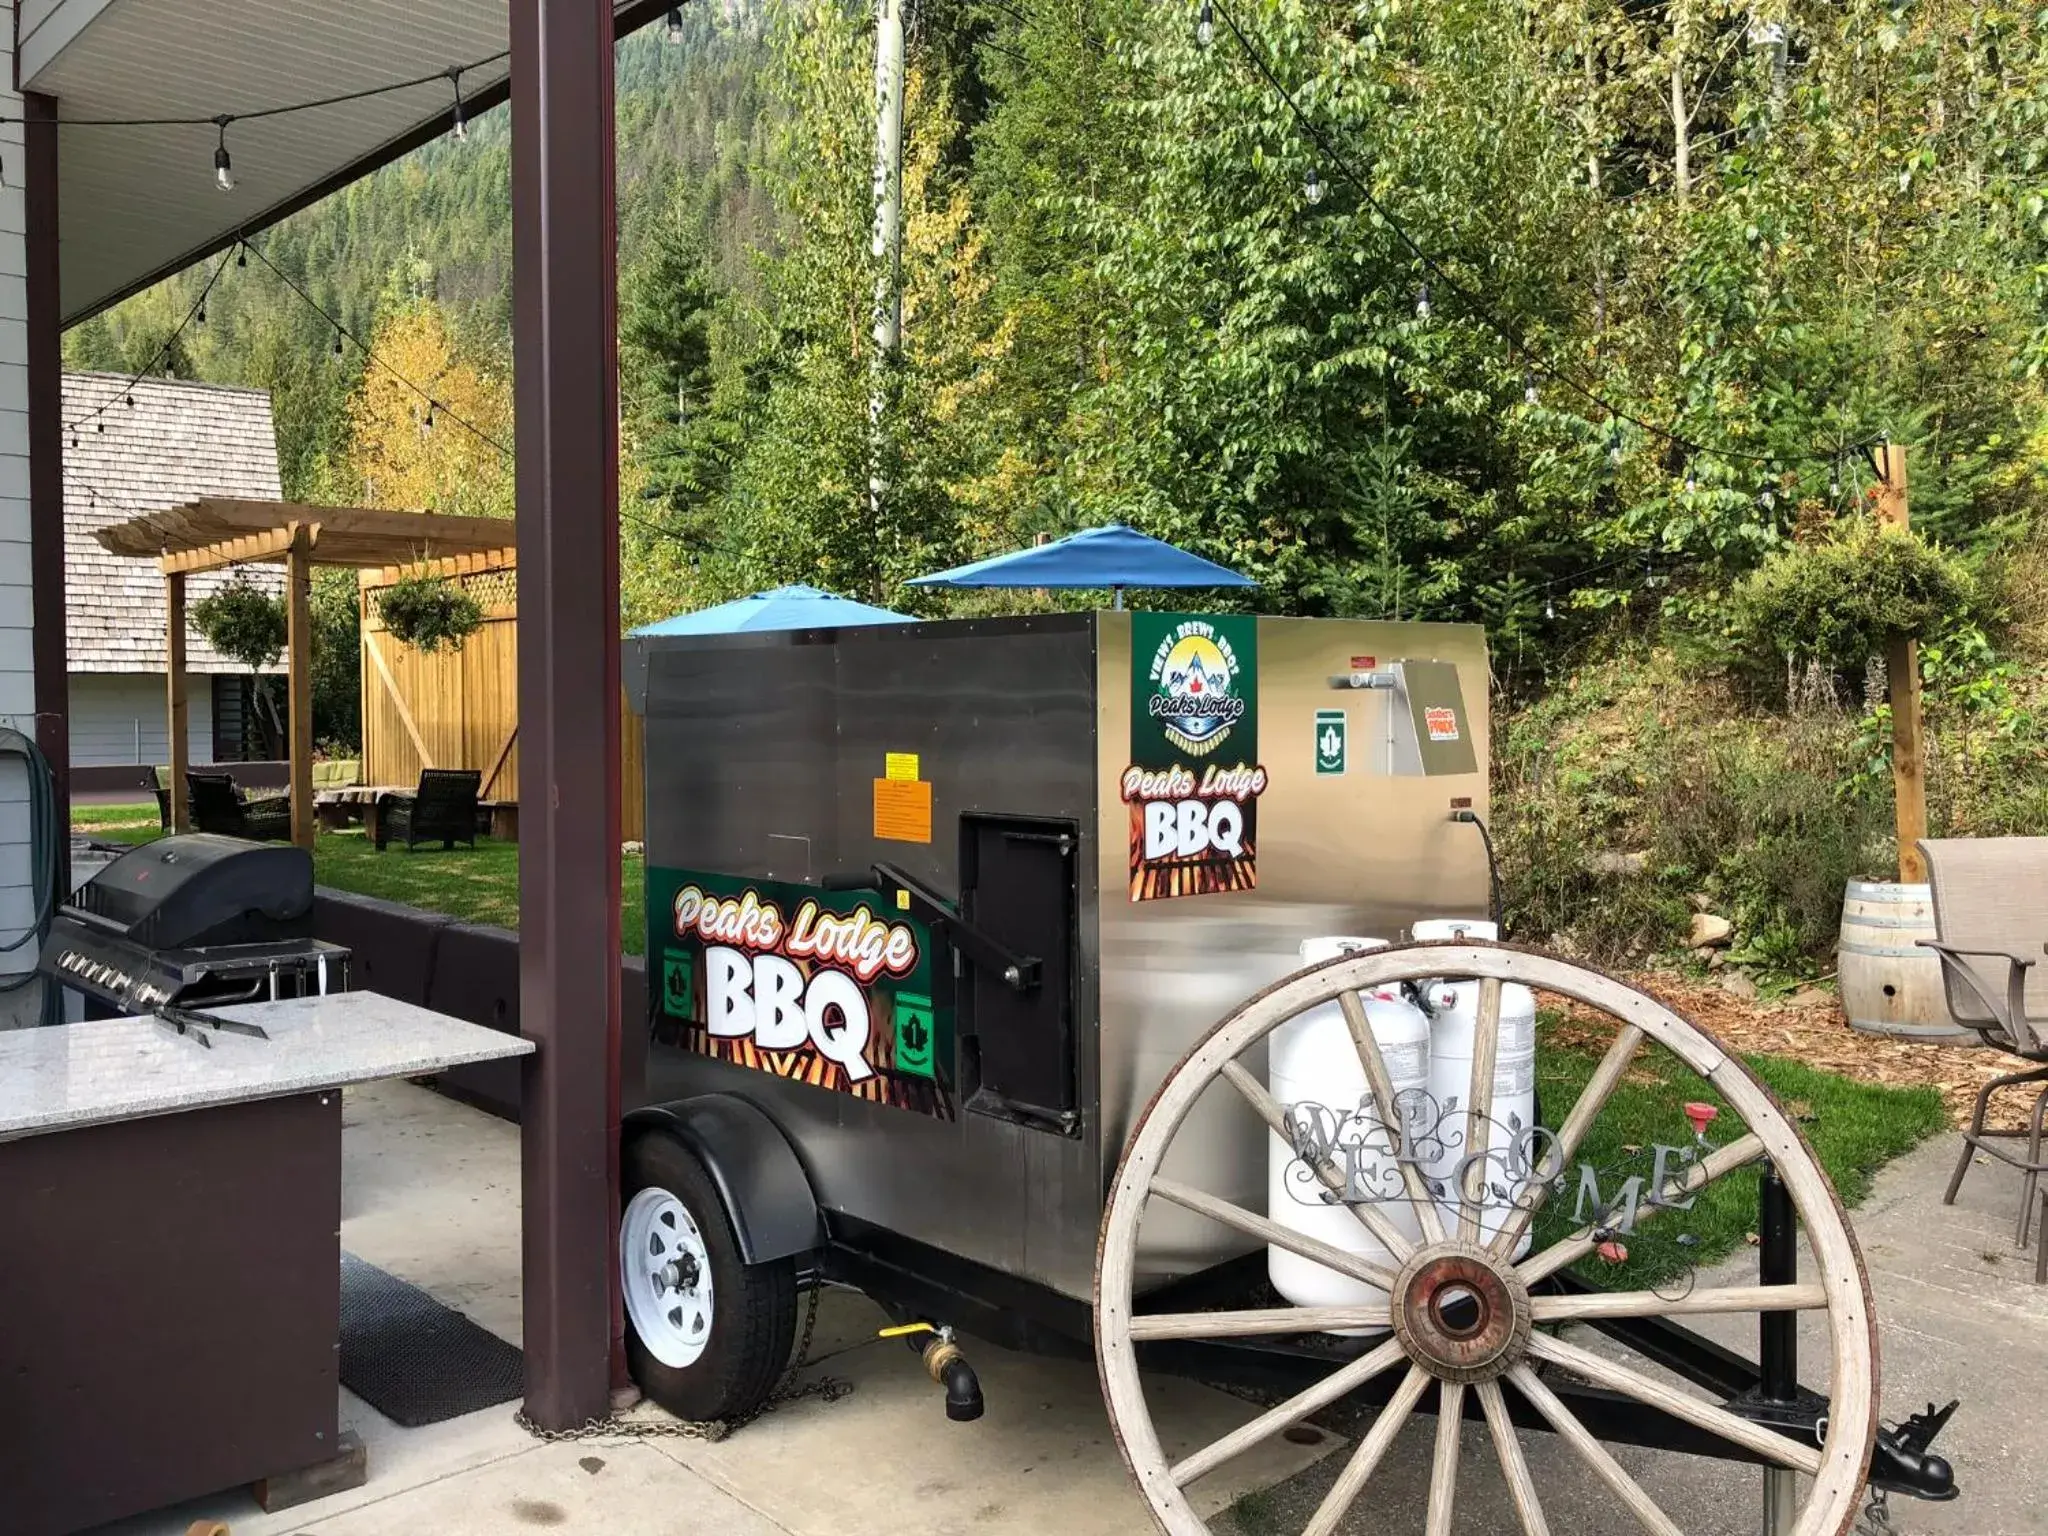 BBQ facilities in Peaks Lodge